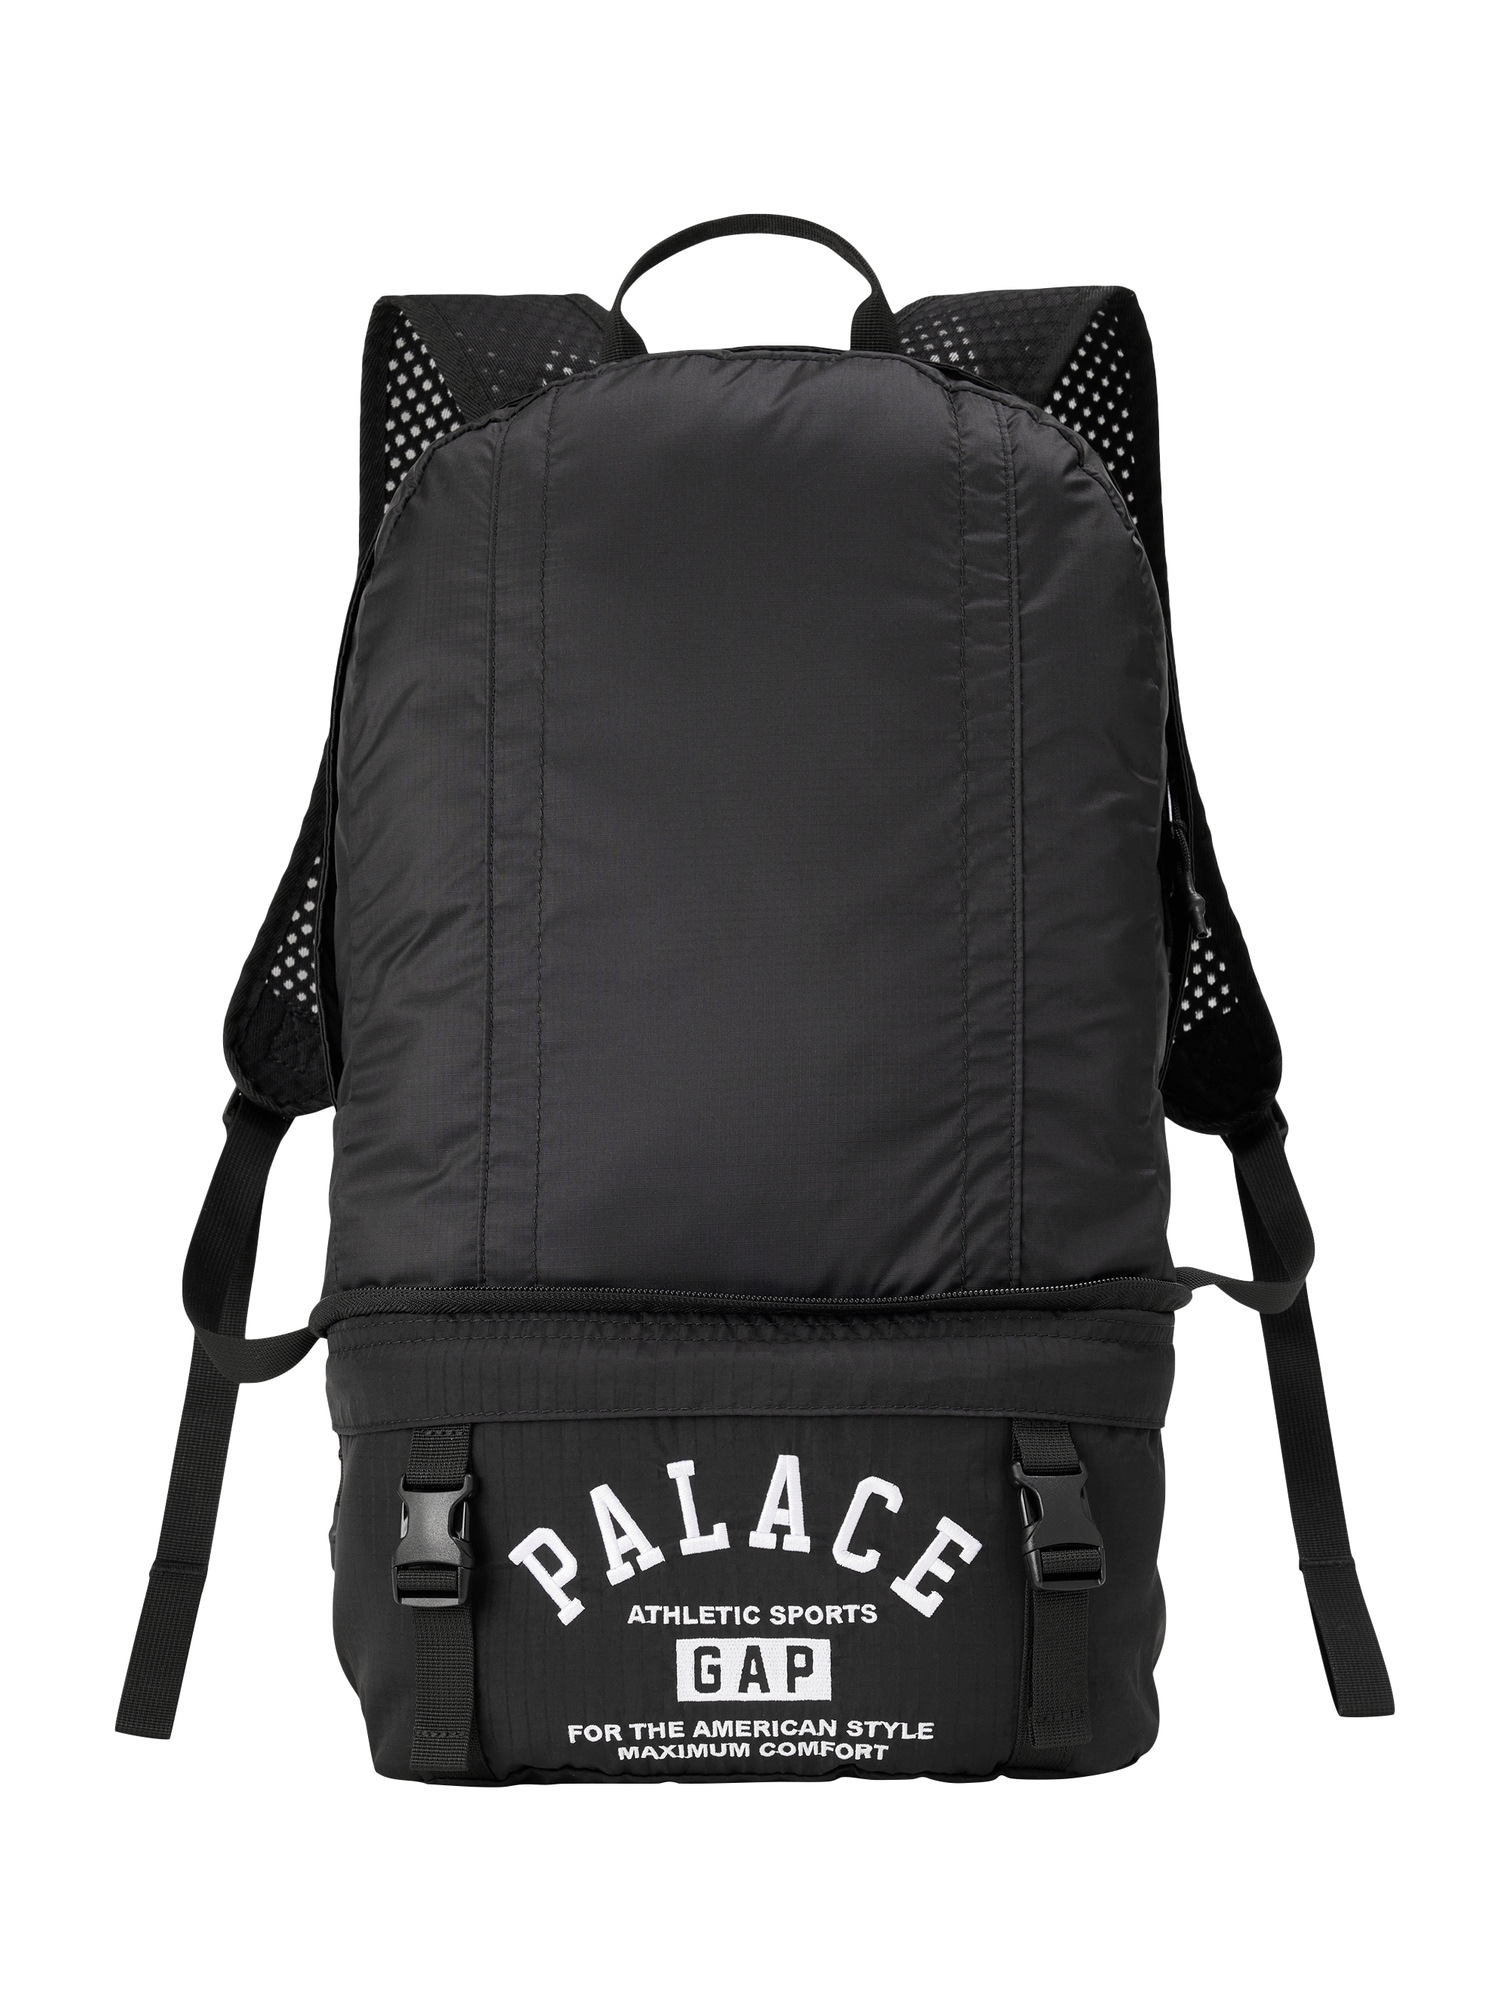 Palace Gap Backpack